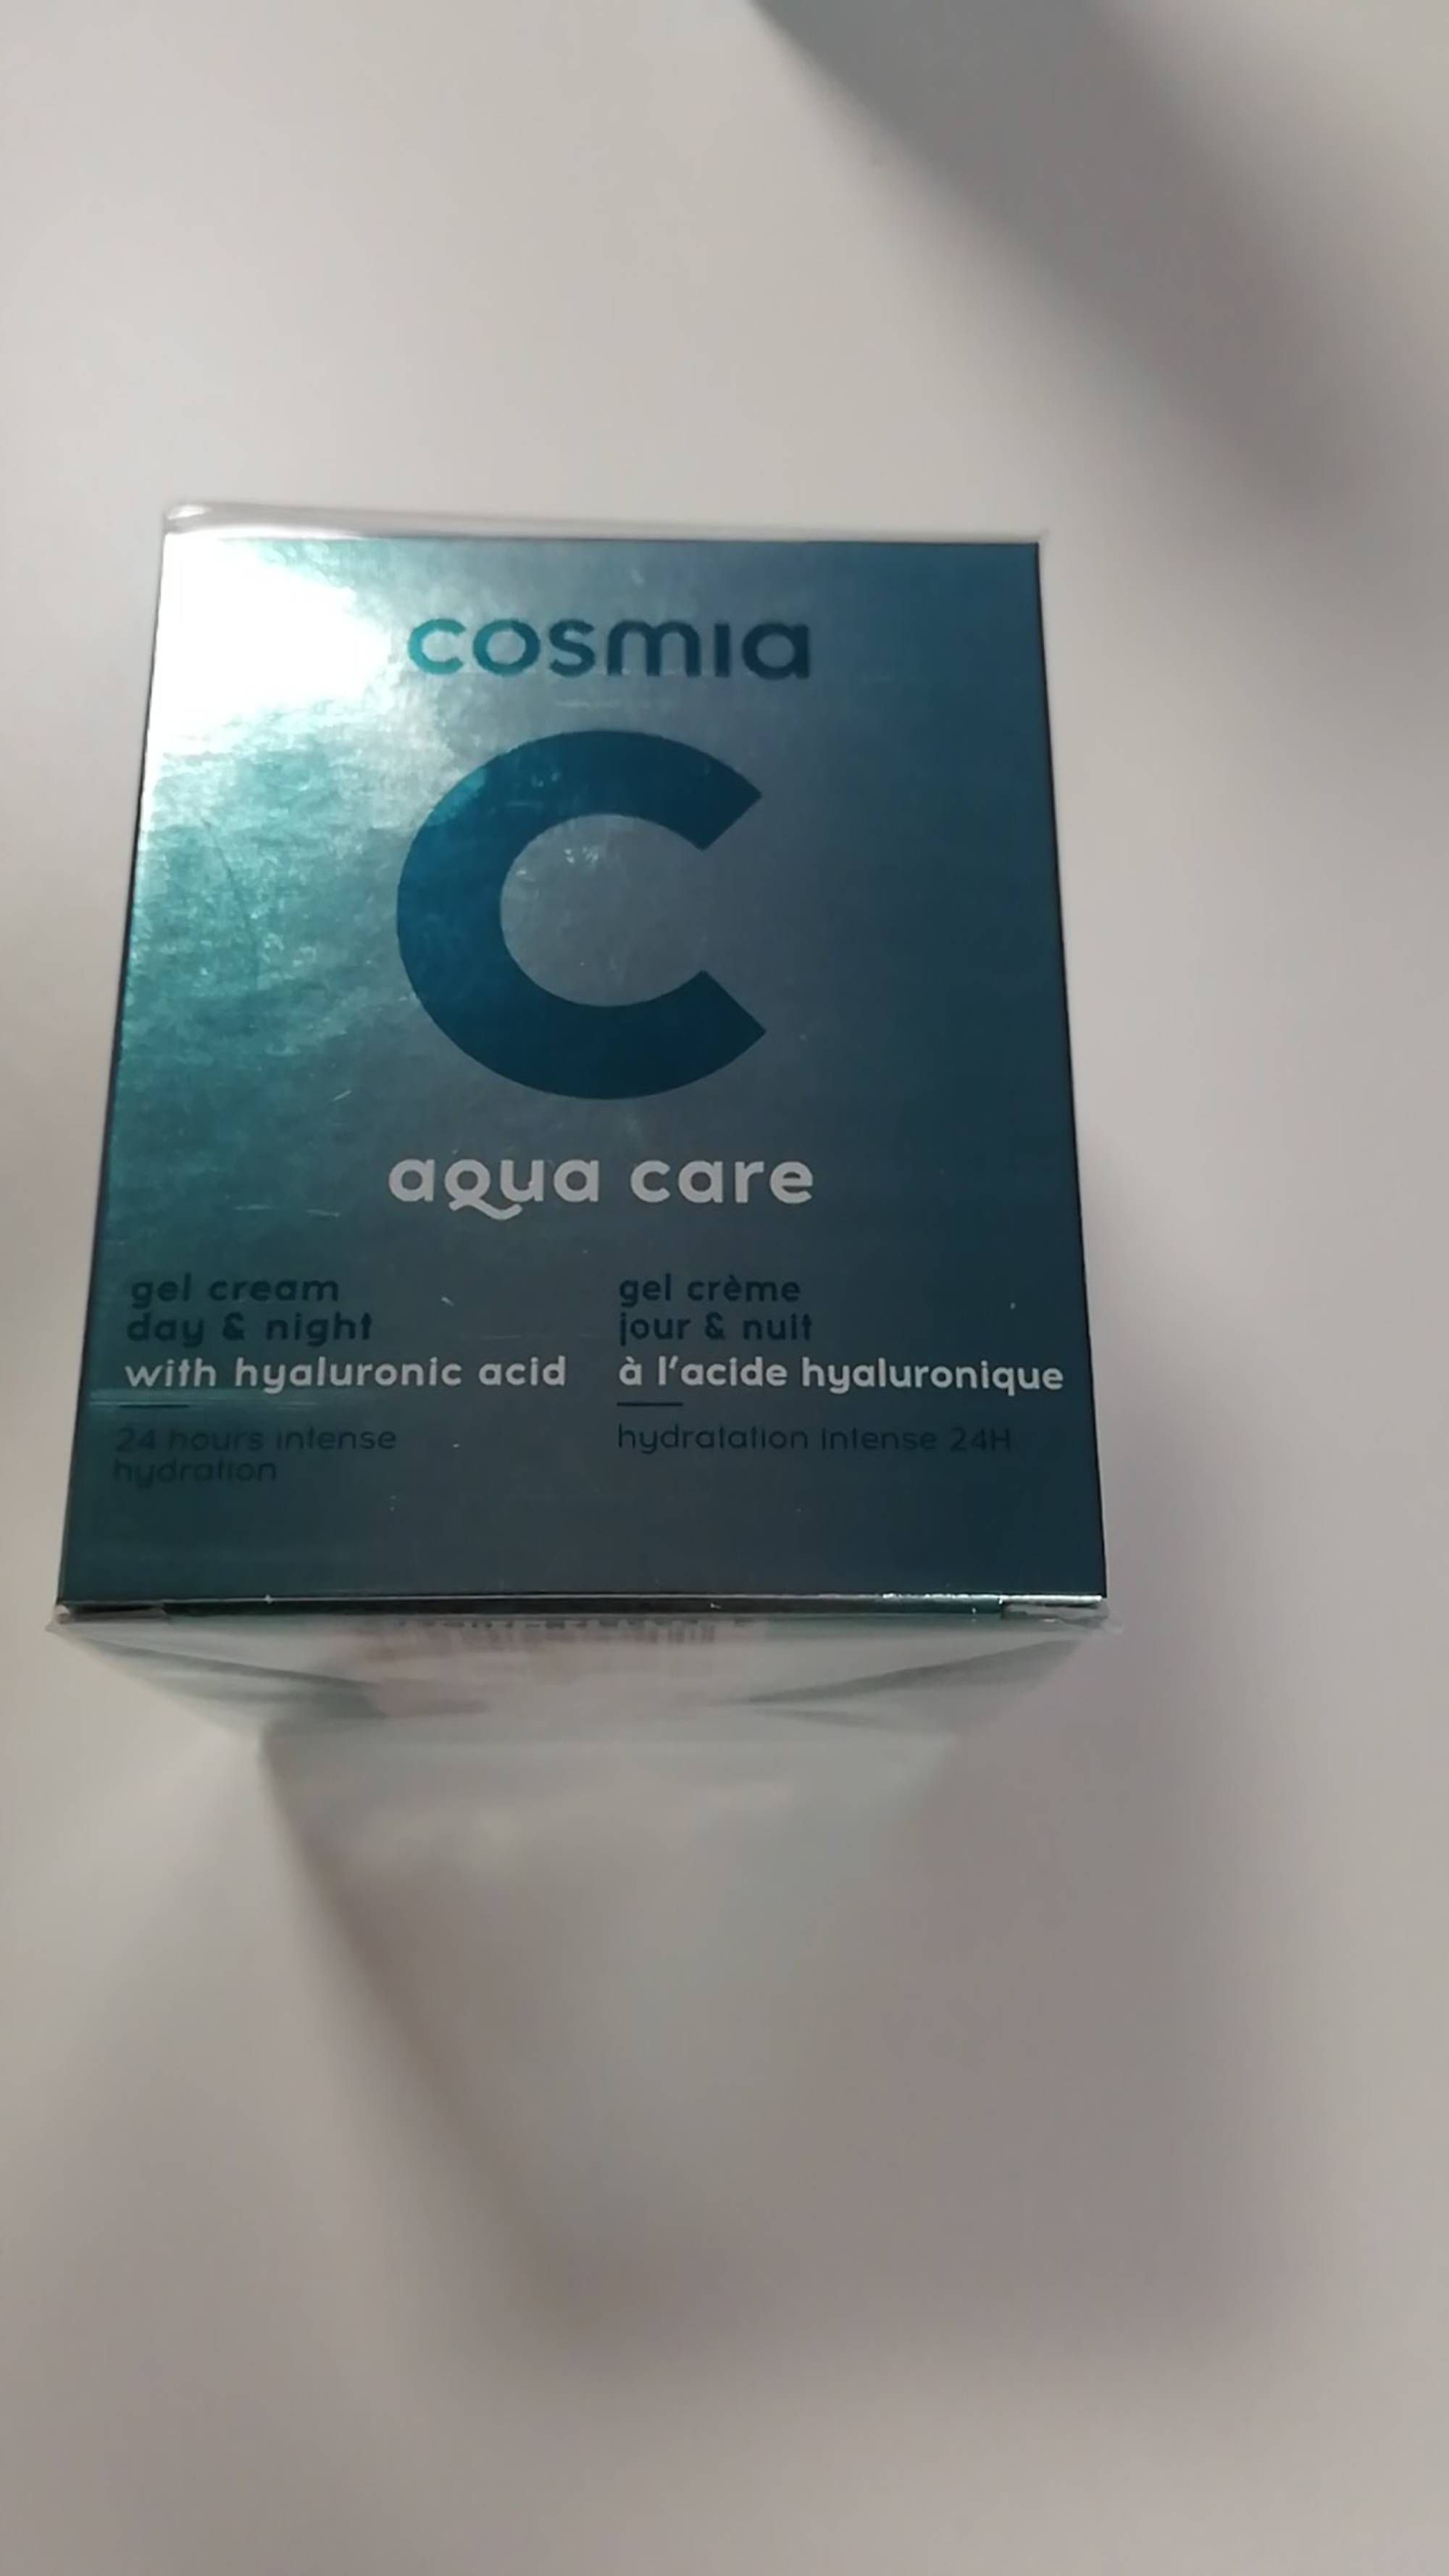 COSMIA - Aqua care - Gel crème jour & nuit 